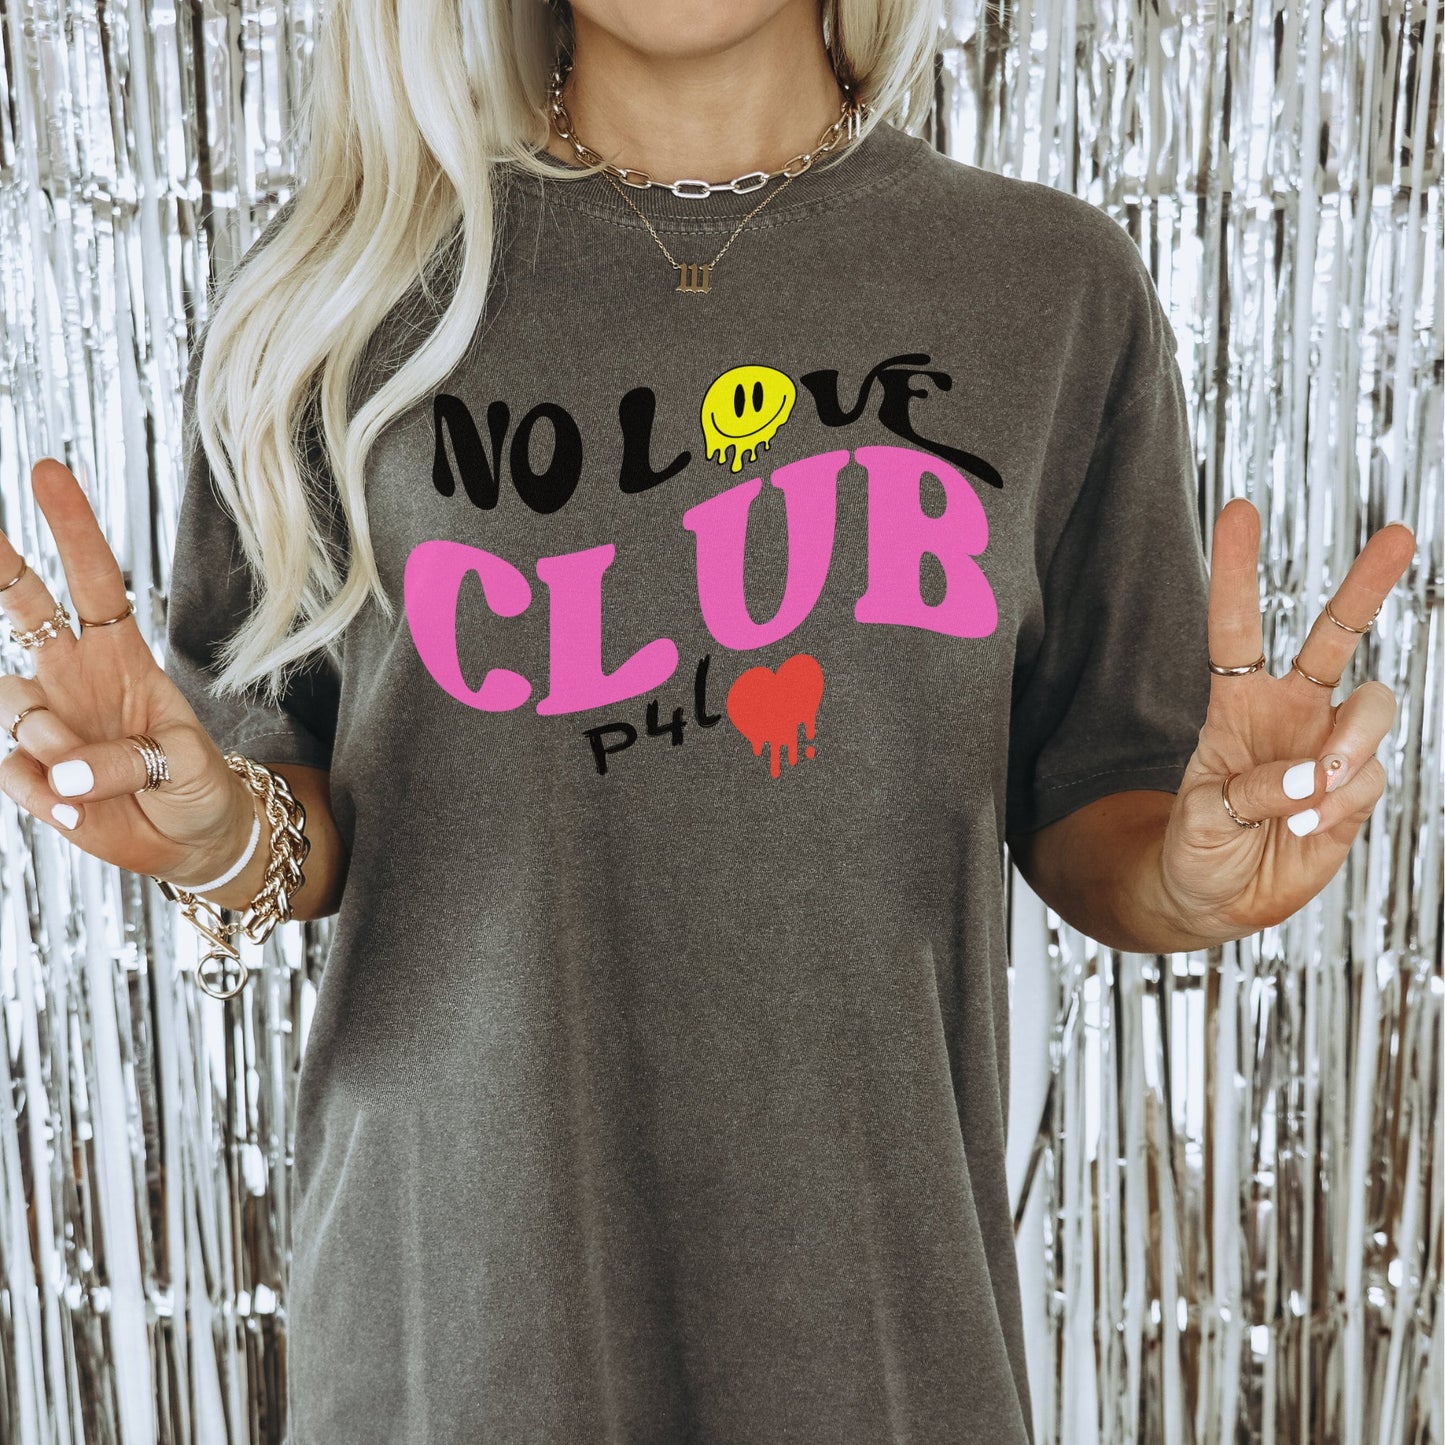 No love club, P4L shirt, Pogues shirt, John B Shirt, Outer Banks, OBX Shirt, Outer Banks Gift, North Carolina, Outer Banks Shirt, JJ obx